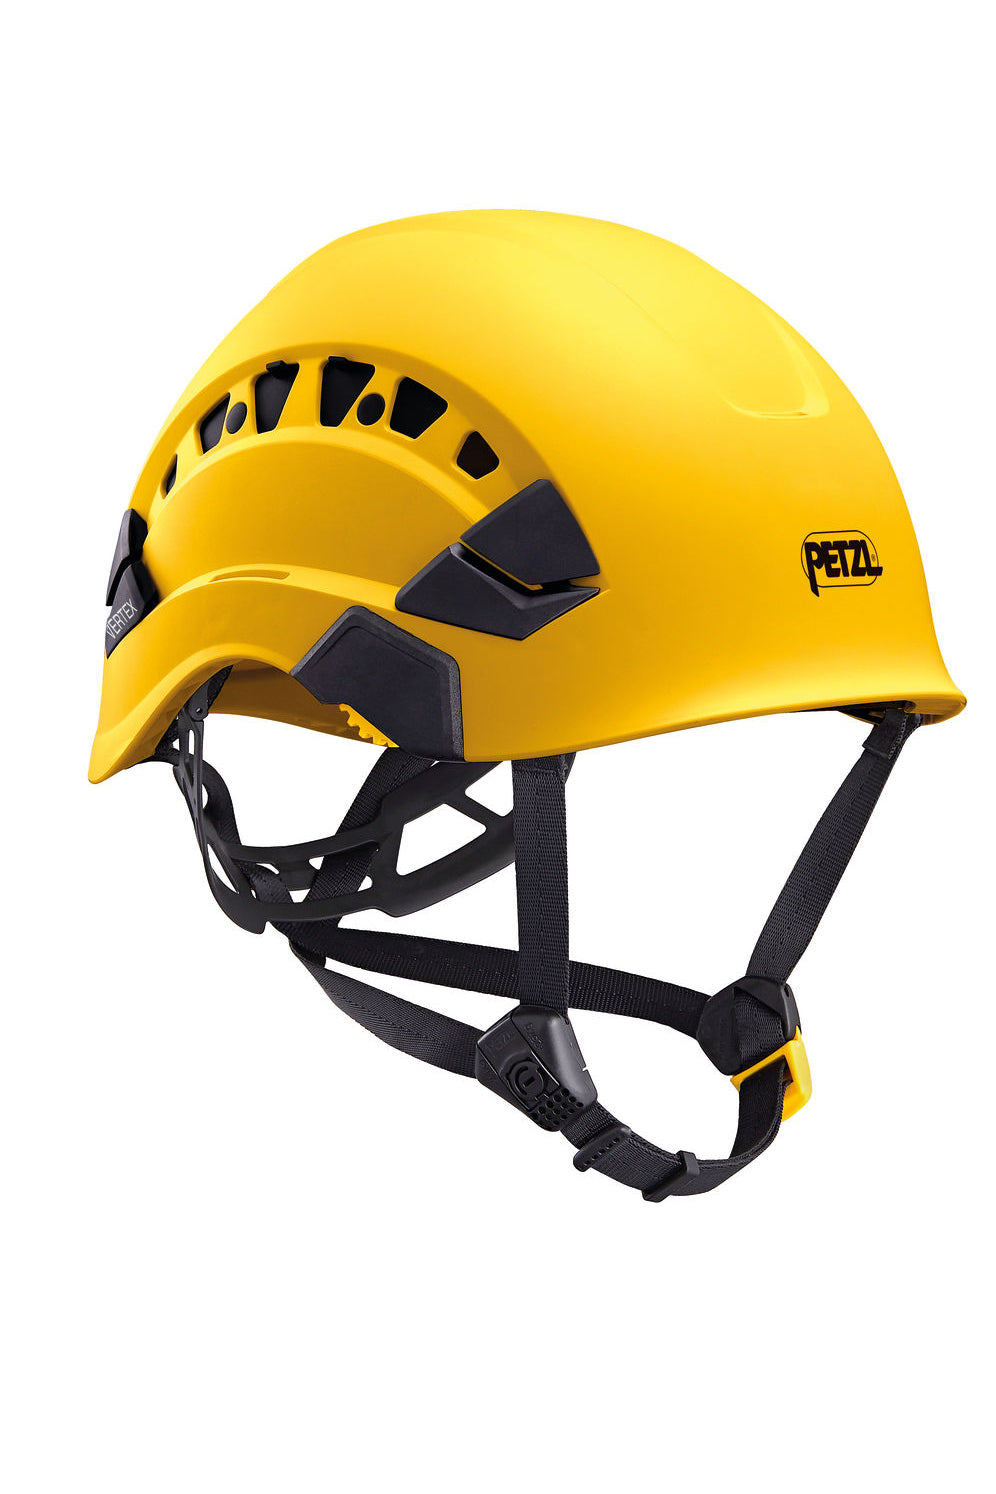 Petzl - Vertex Vent Helmet